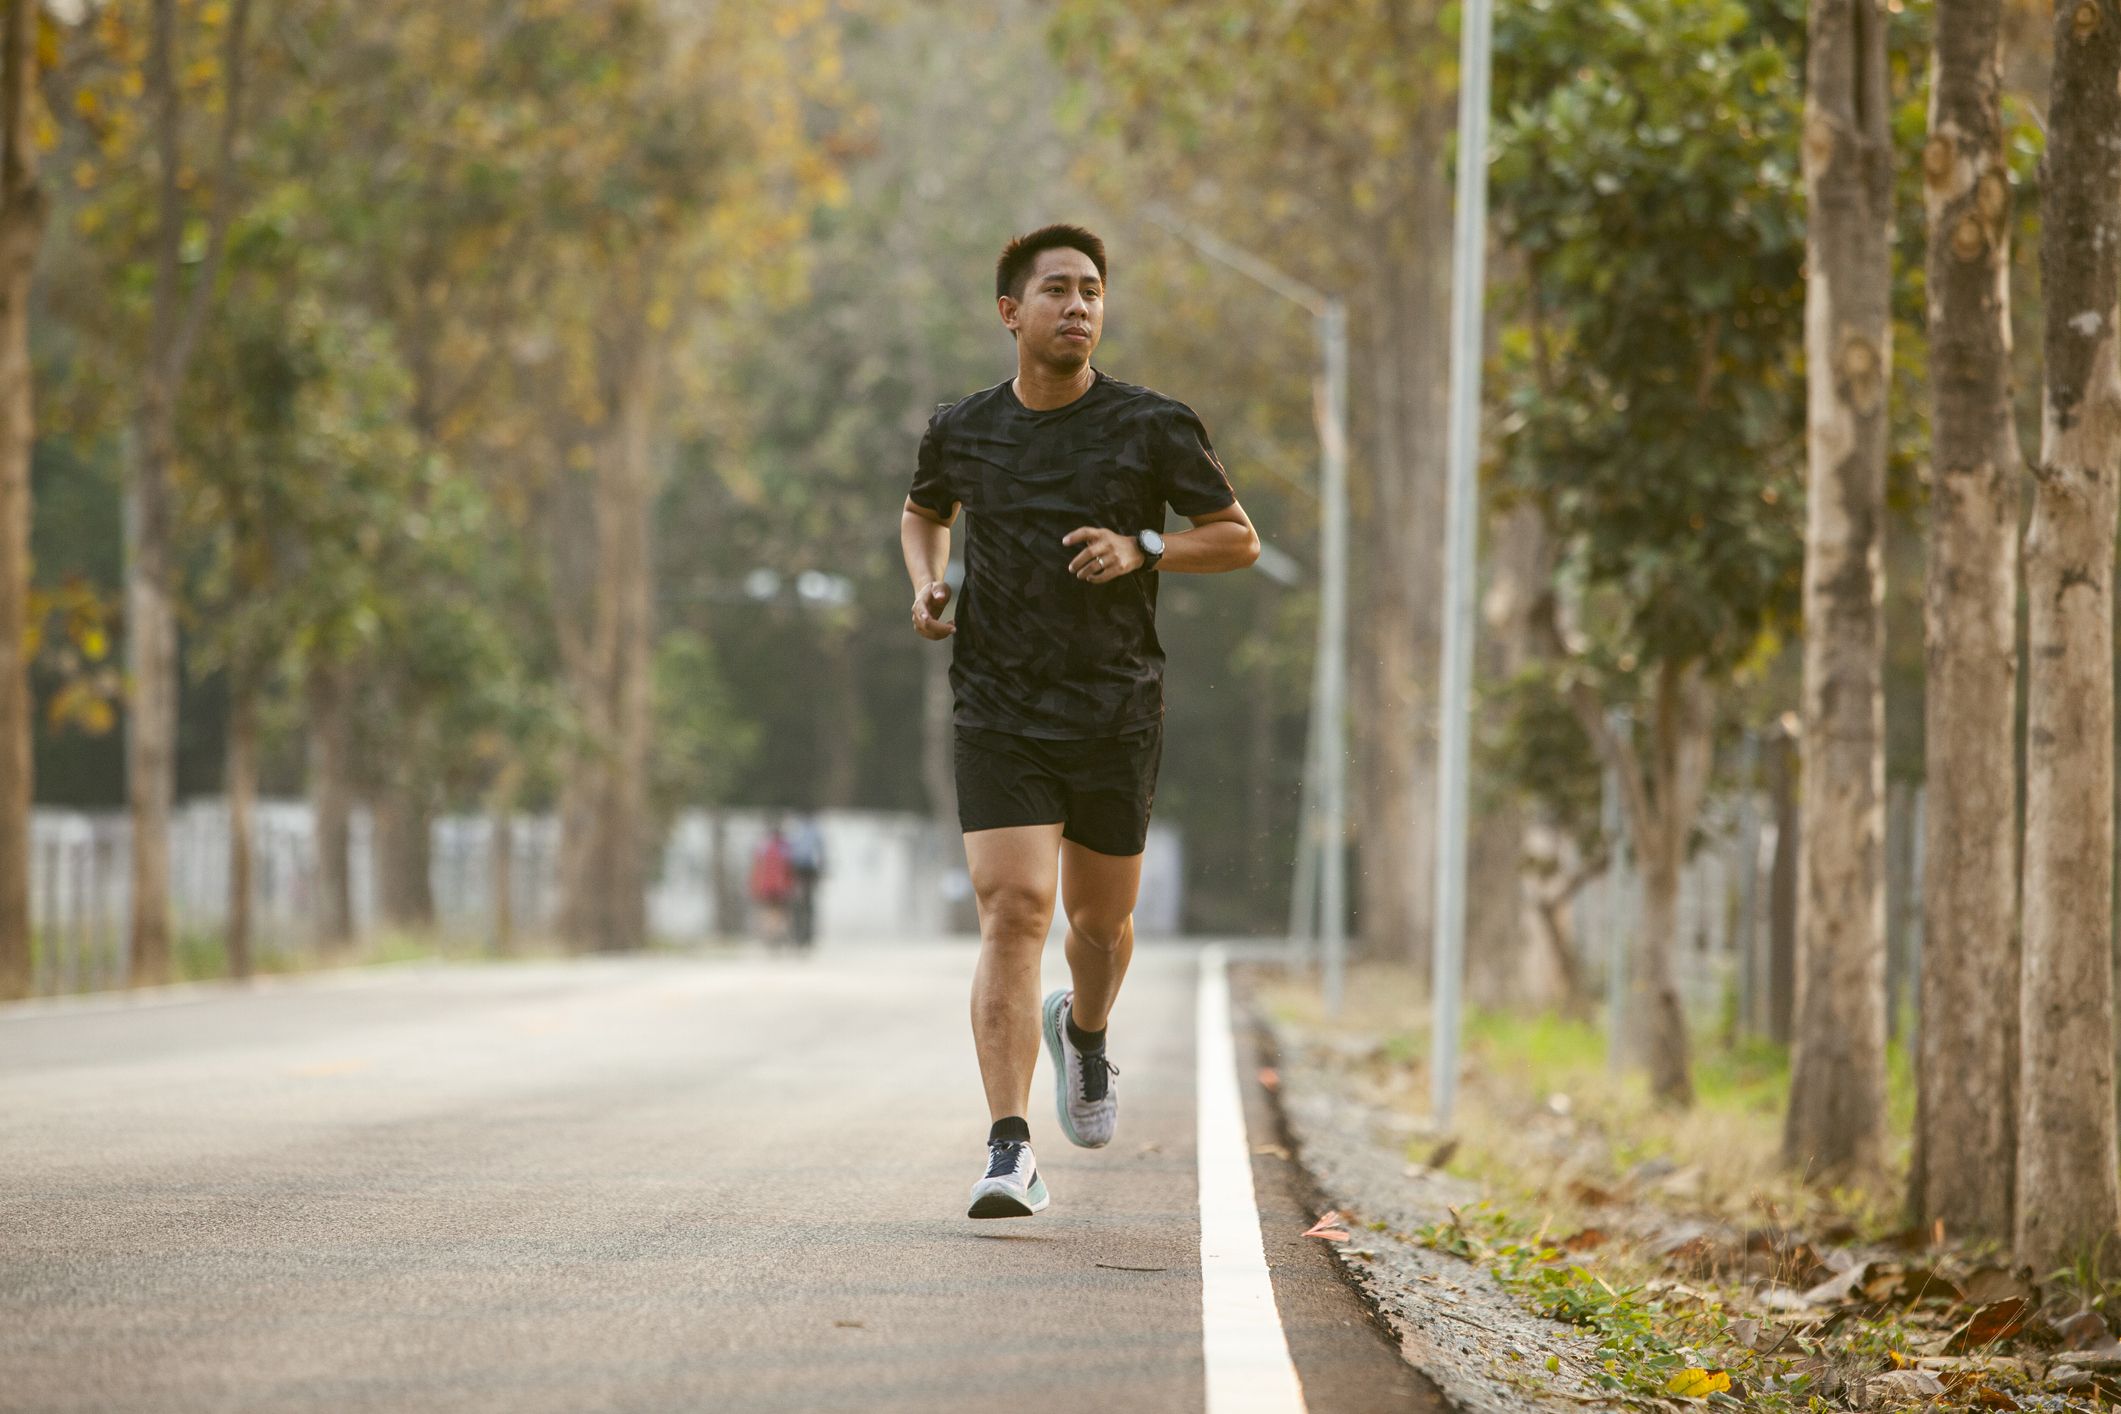 11 benefits of running